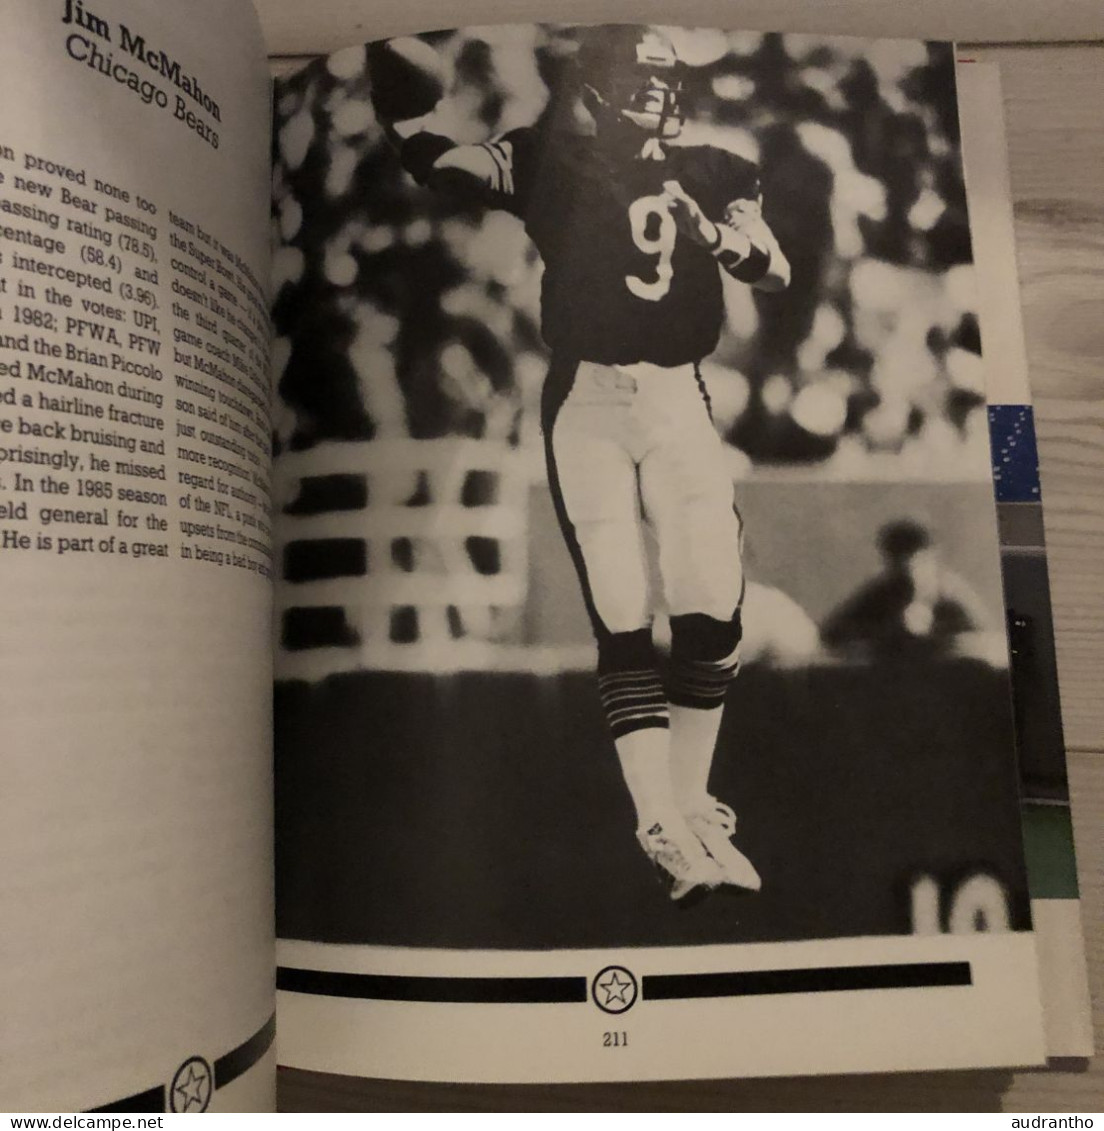 livre football américain THE COMPLETE AMERICAN FOOTBALL BOOK Nicky Horne Paul MacCartney 1986